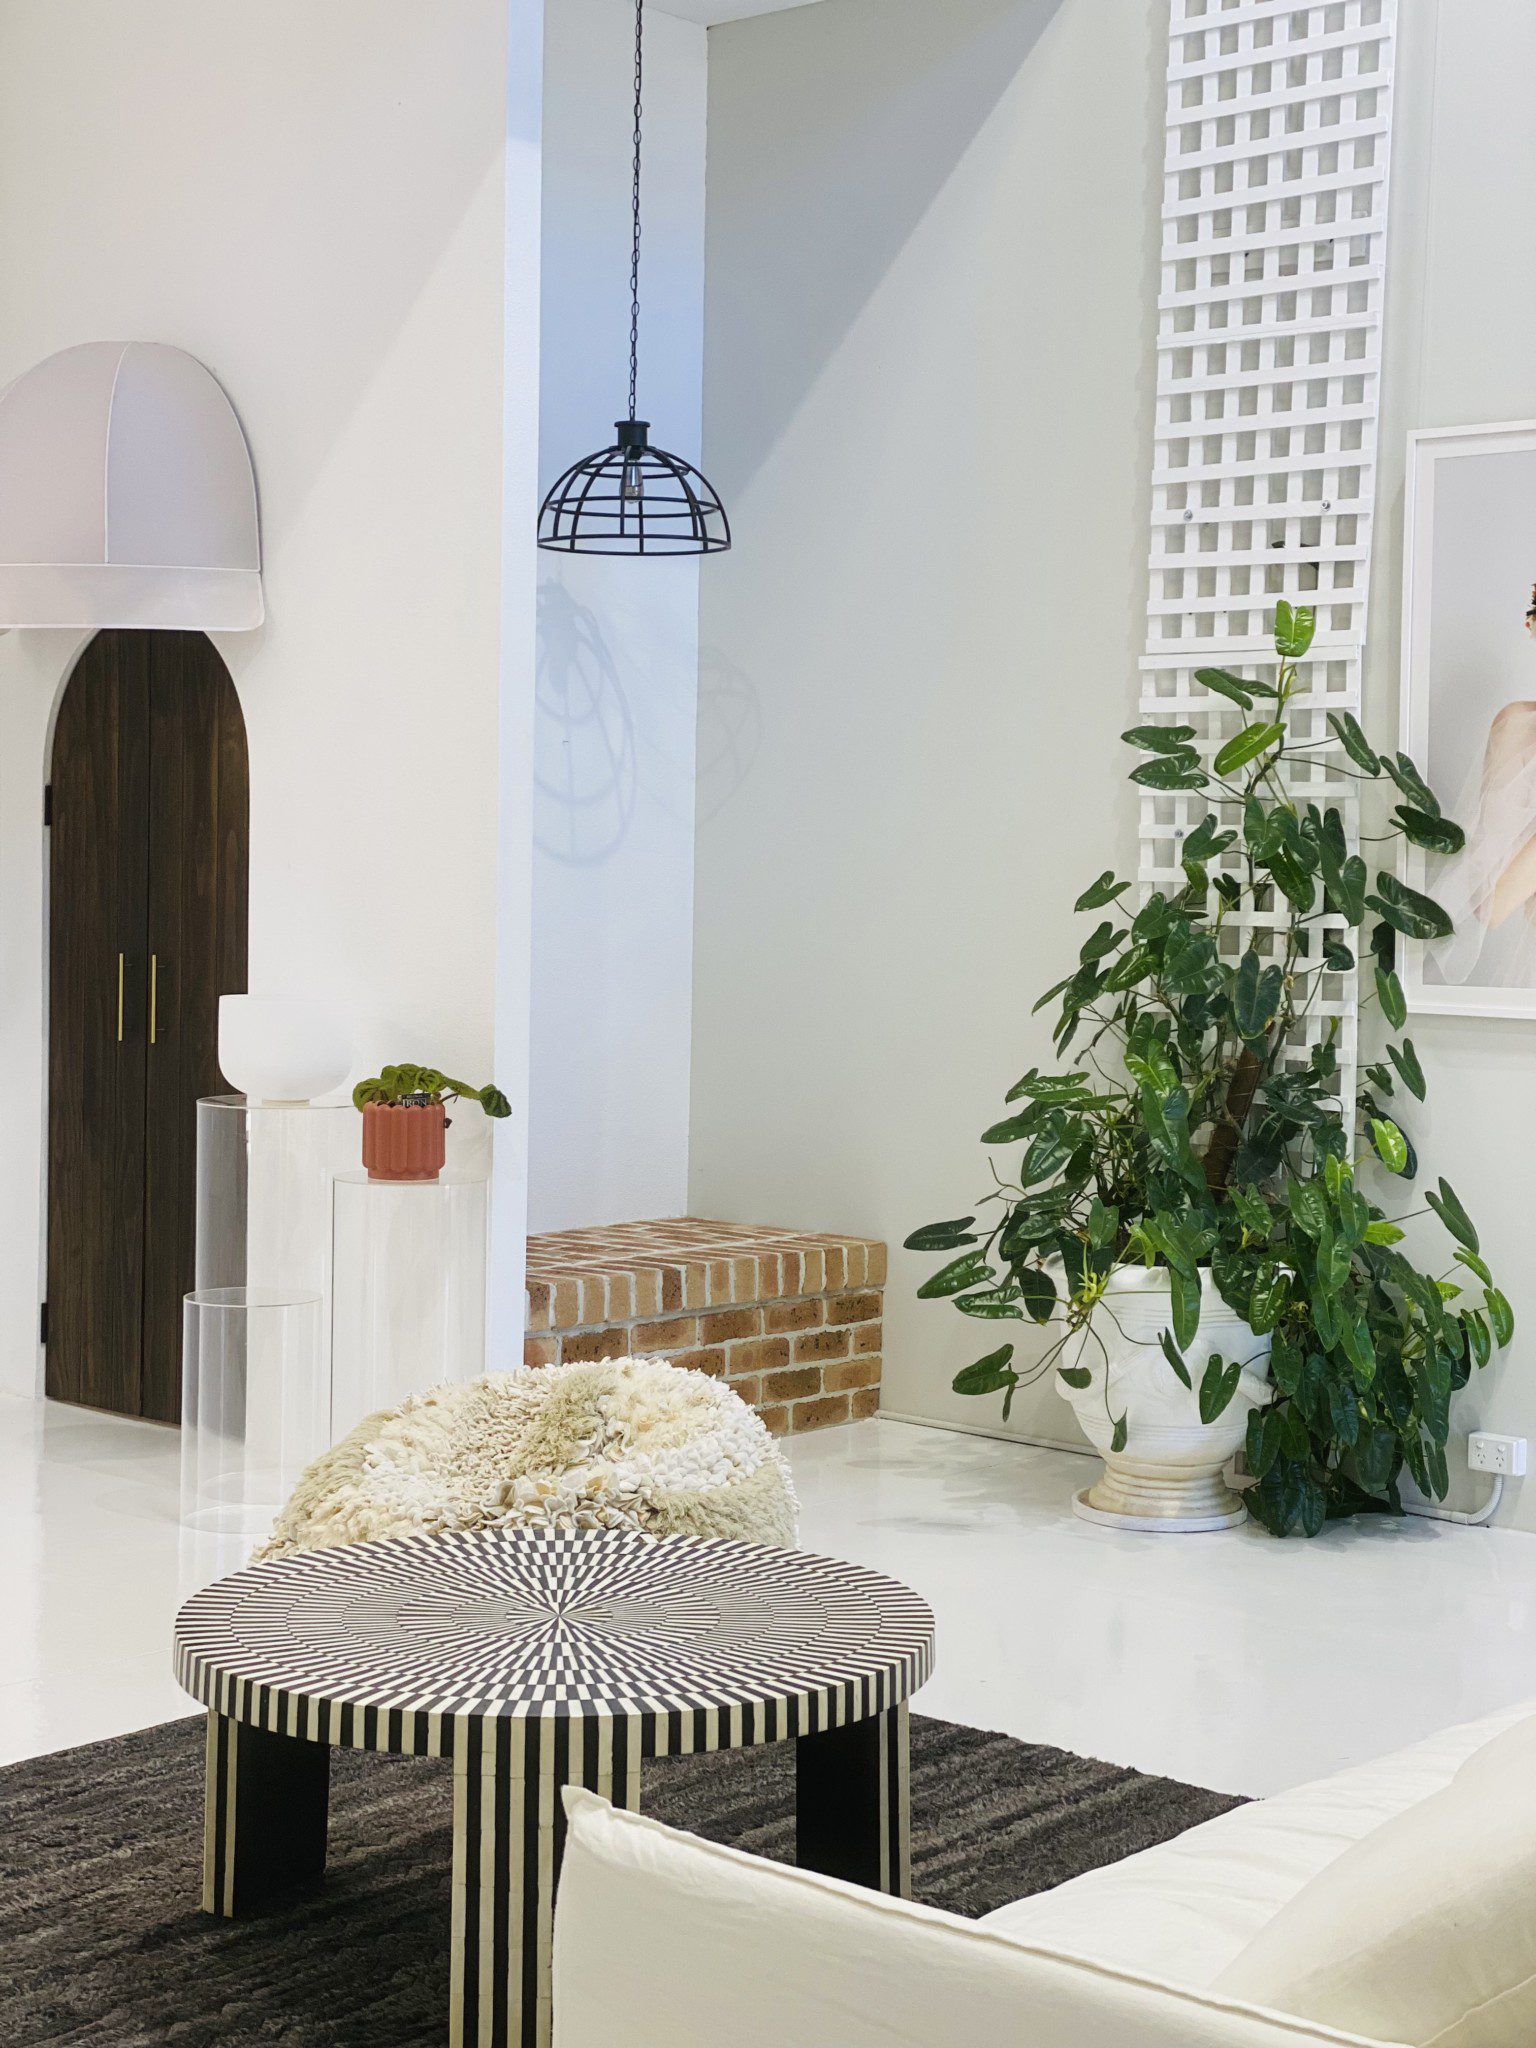 The Flagstone – Mediterranean style studio space